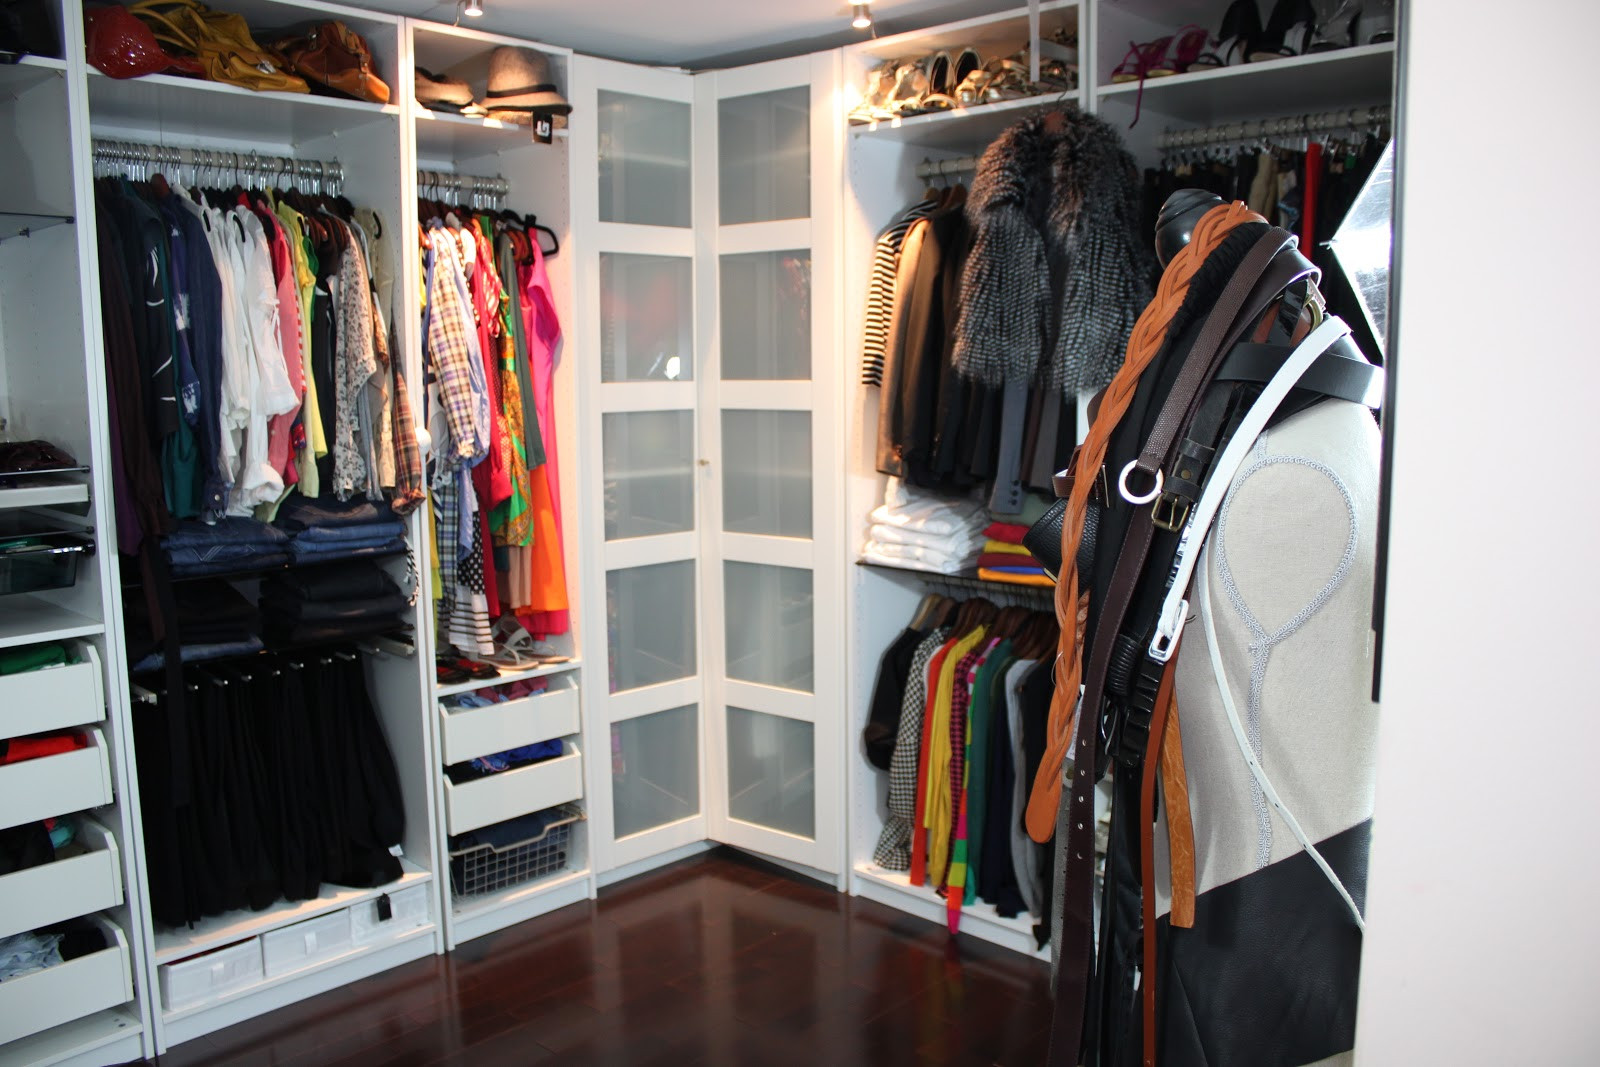 Best ideas about DIY Closet Organization
. Save or Pin DIY Closet Organization – Beaute J adore Now.